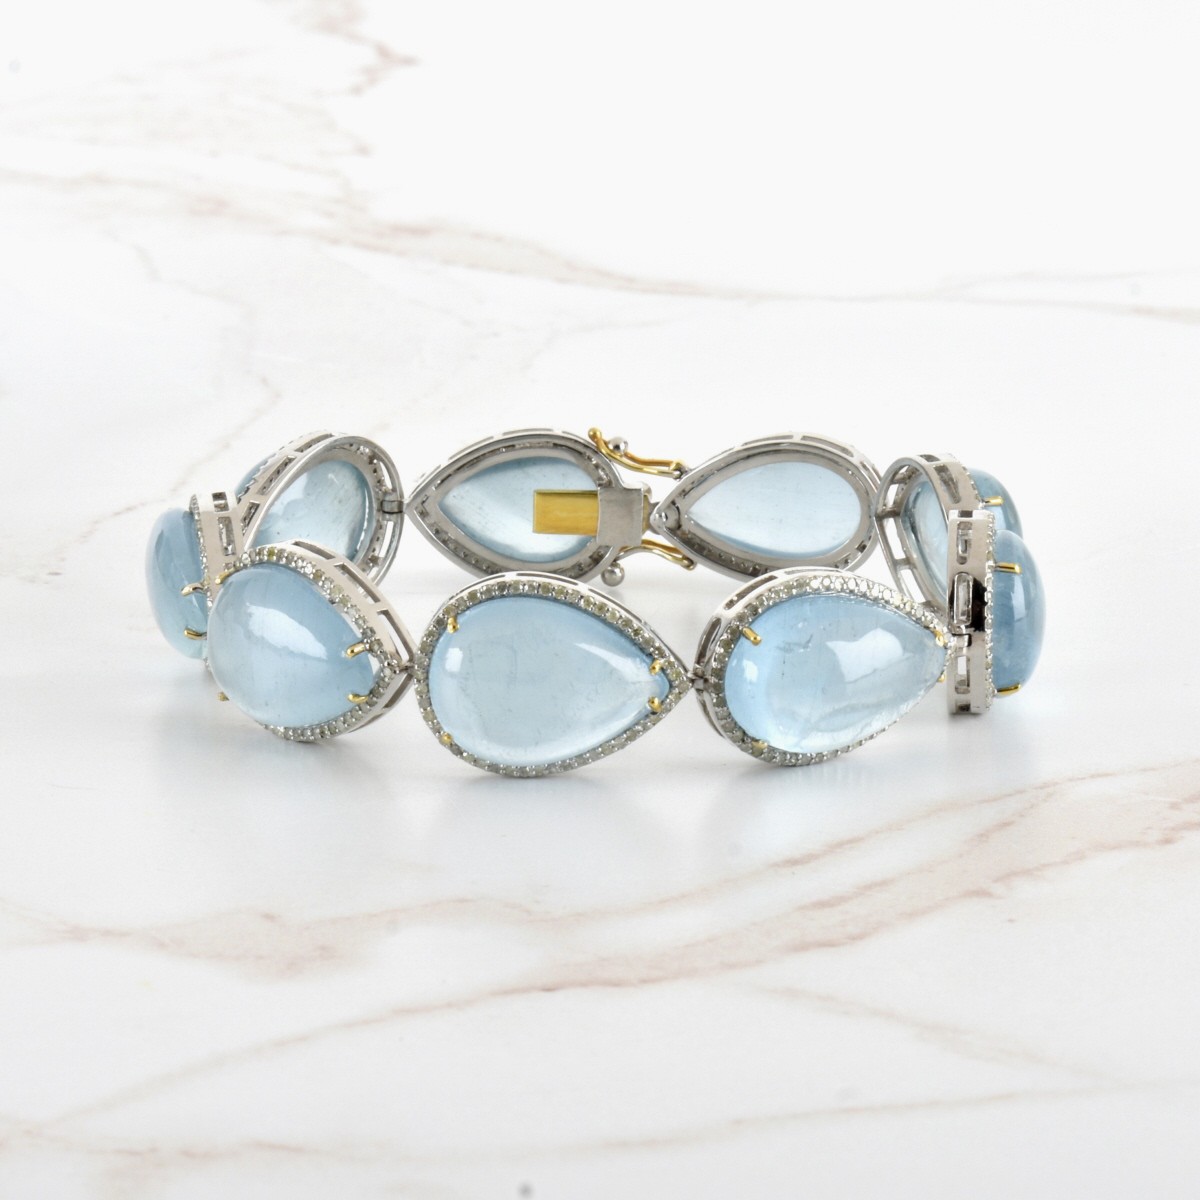 Aquamarine and Silver Bracelet